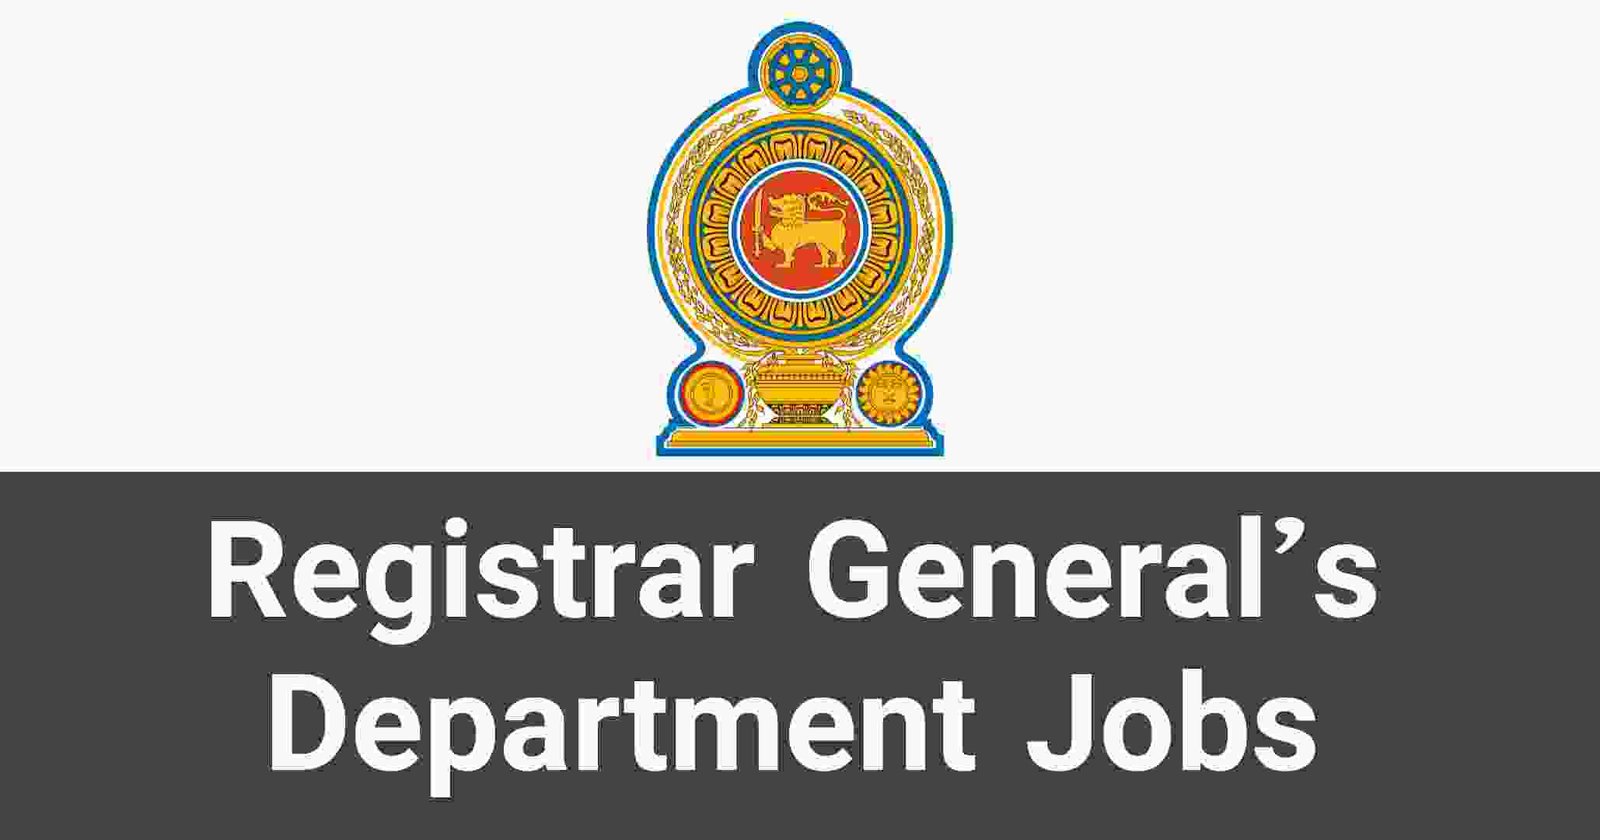 Registrar General’s Department Jobs Vacancies Careers